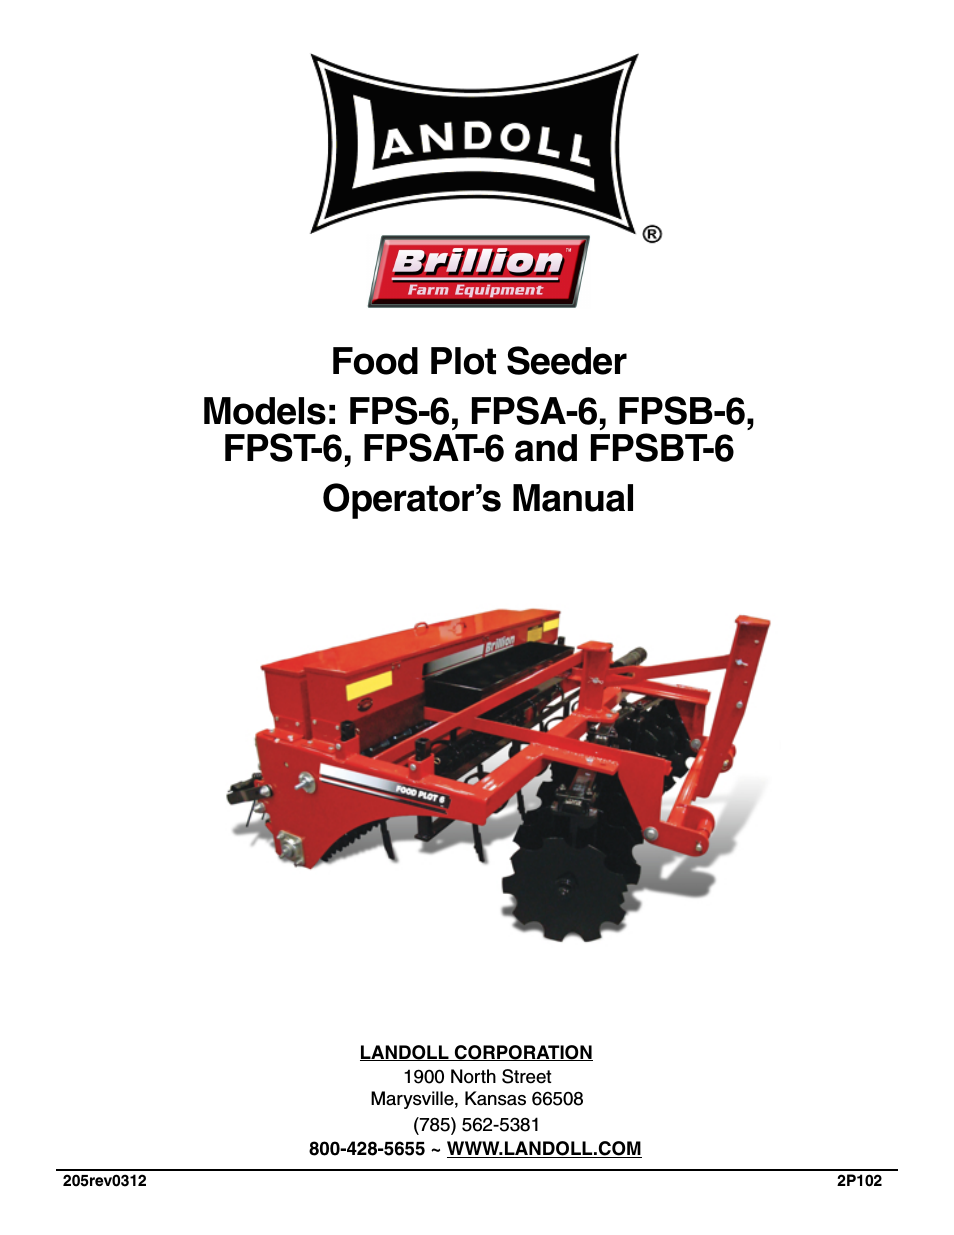 FPS-6 Food Plot Seeder